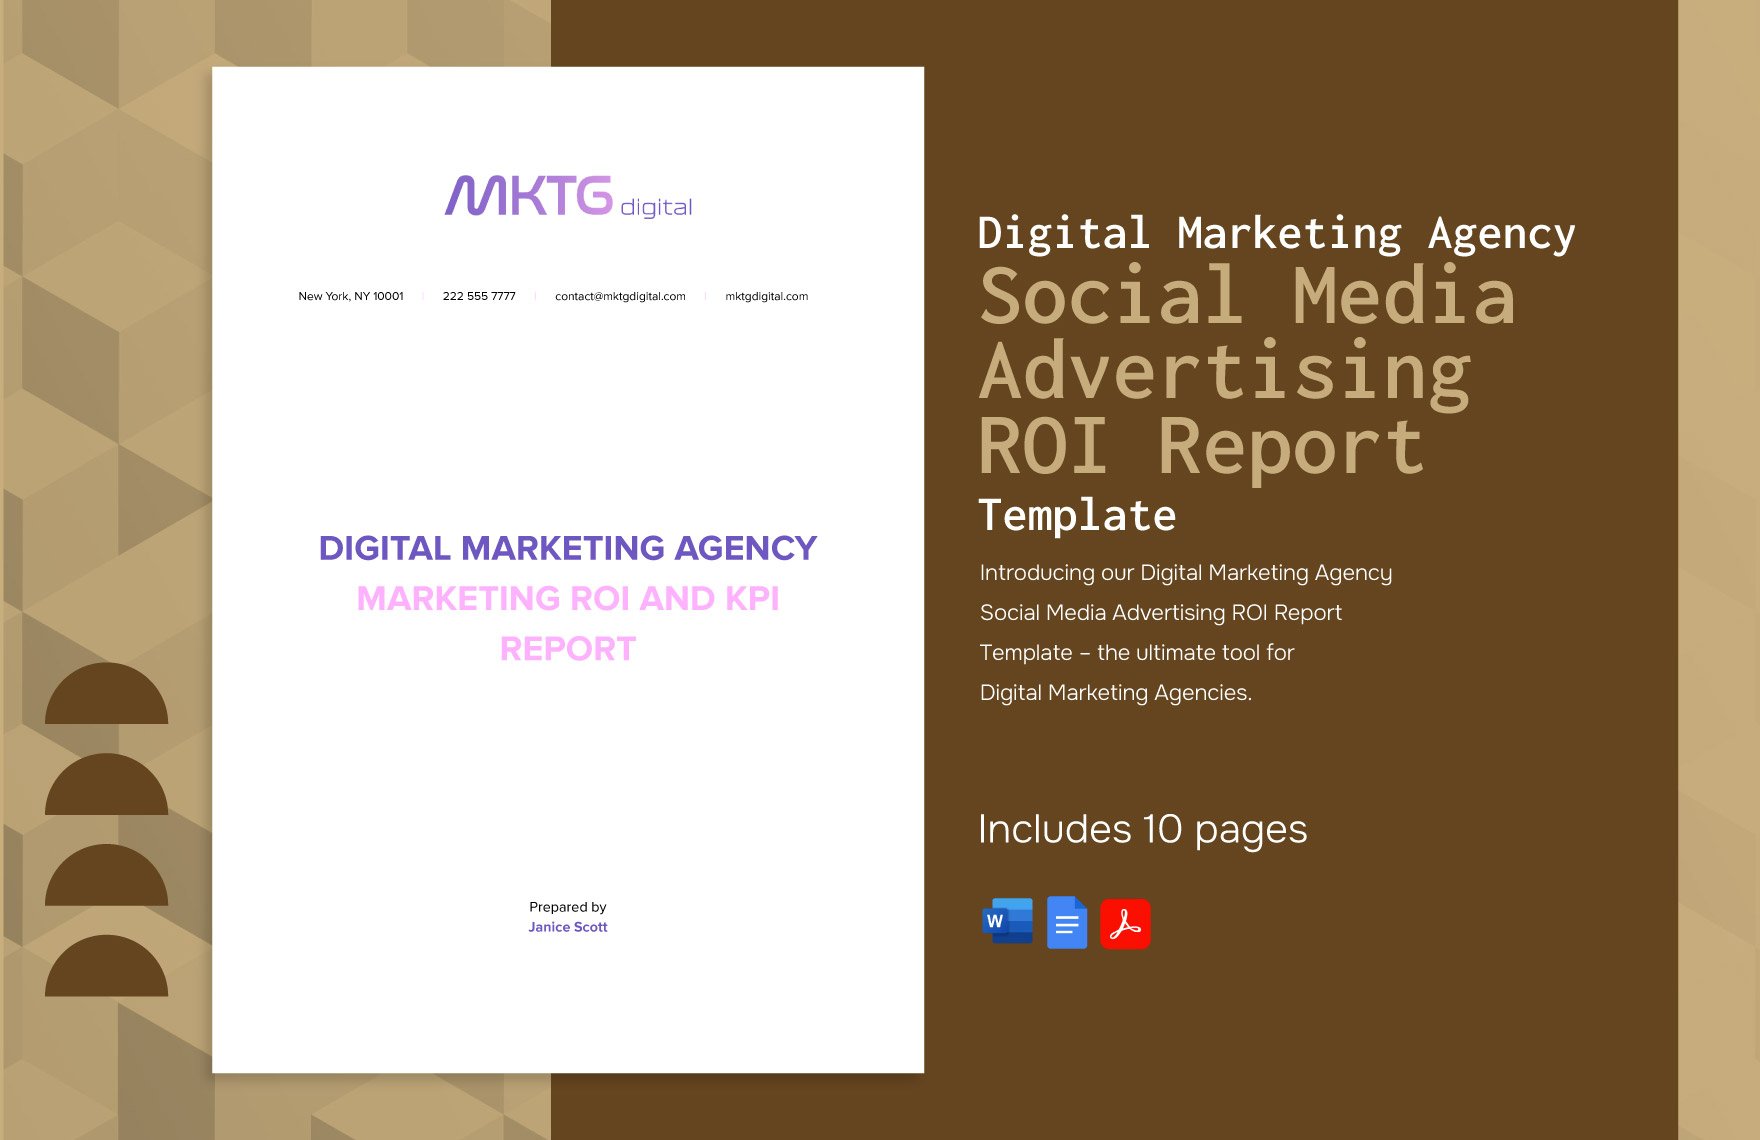 Digital Marketing Agency Social Media Advertising ROI Report Template